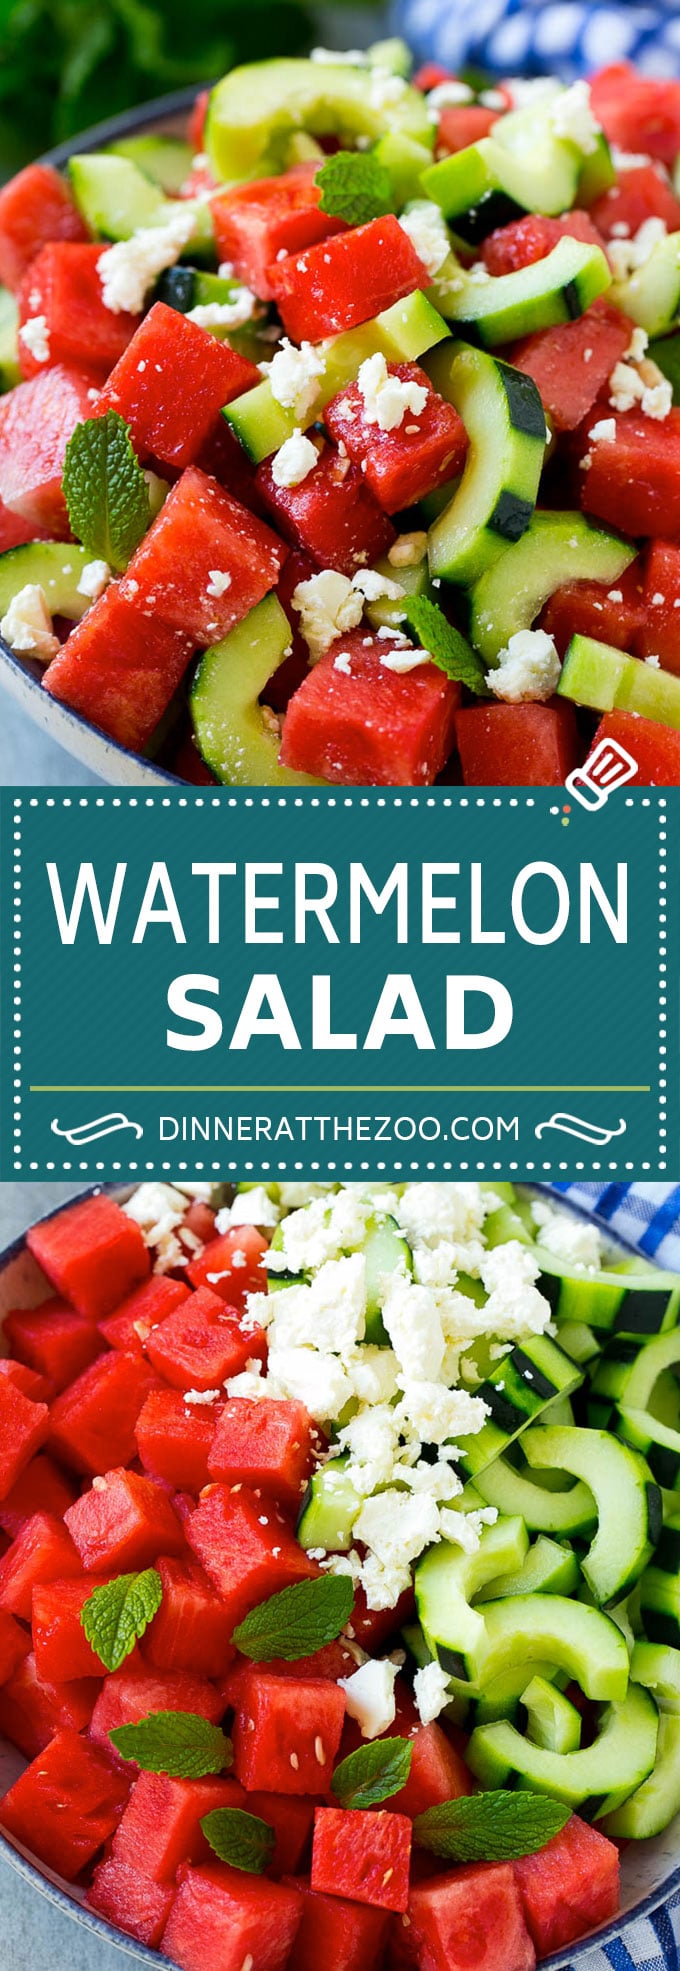 Watermelon Salad Recipe | Watermelon Feta Salad | Watermelon Cucumber Salad #watermelon #cucumber #salad #dinneratthezoo